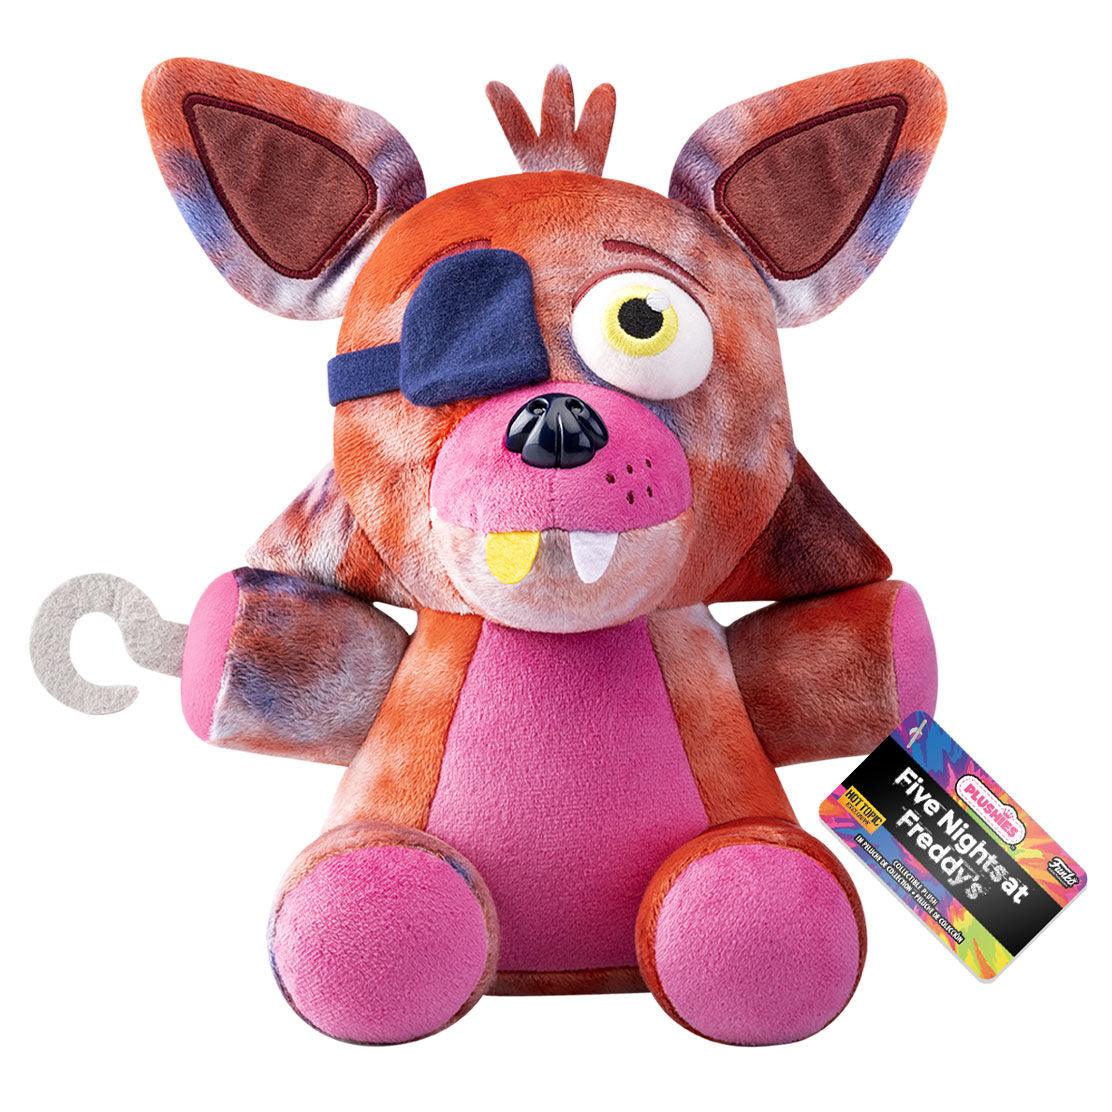  Five Nights at Freddy's Plush Toy 4pc Set 10 Stuff Animal  Plush Toy : Toys & Games